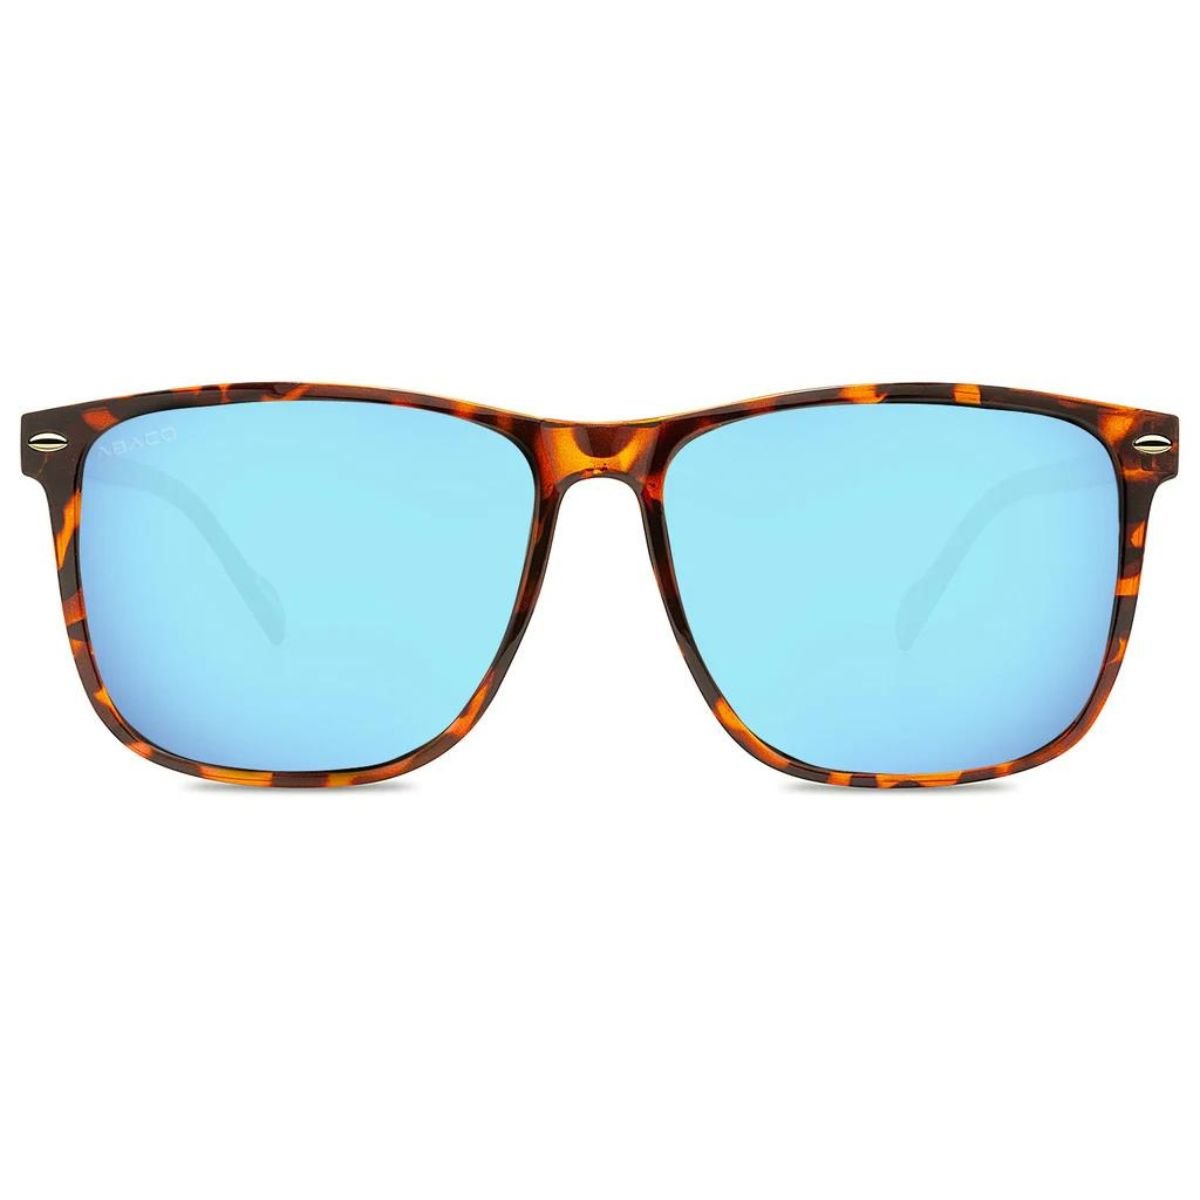 Abaco Jesse Sunglasses in Tortoise/Caribbean Blue - BoardCo